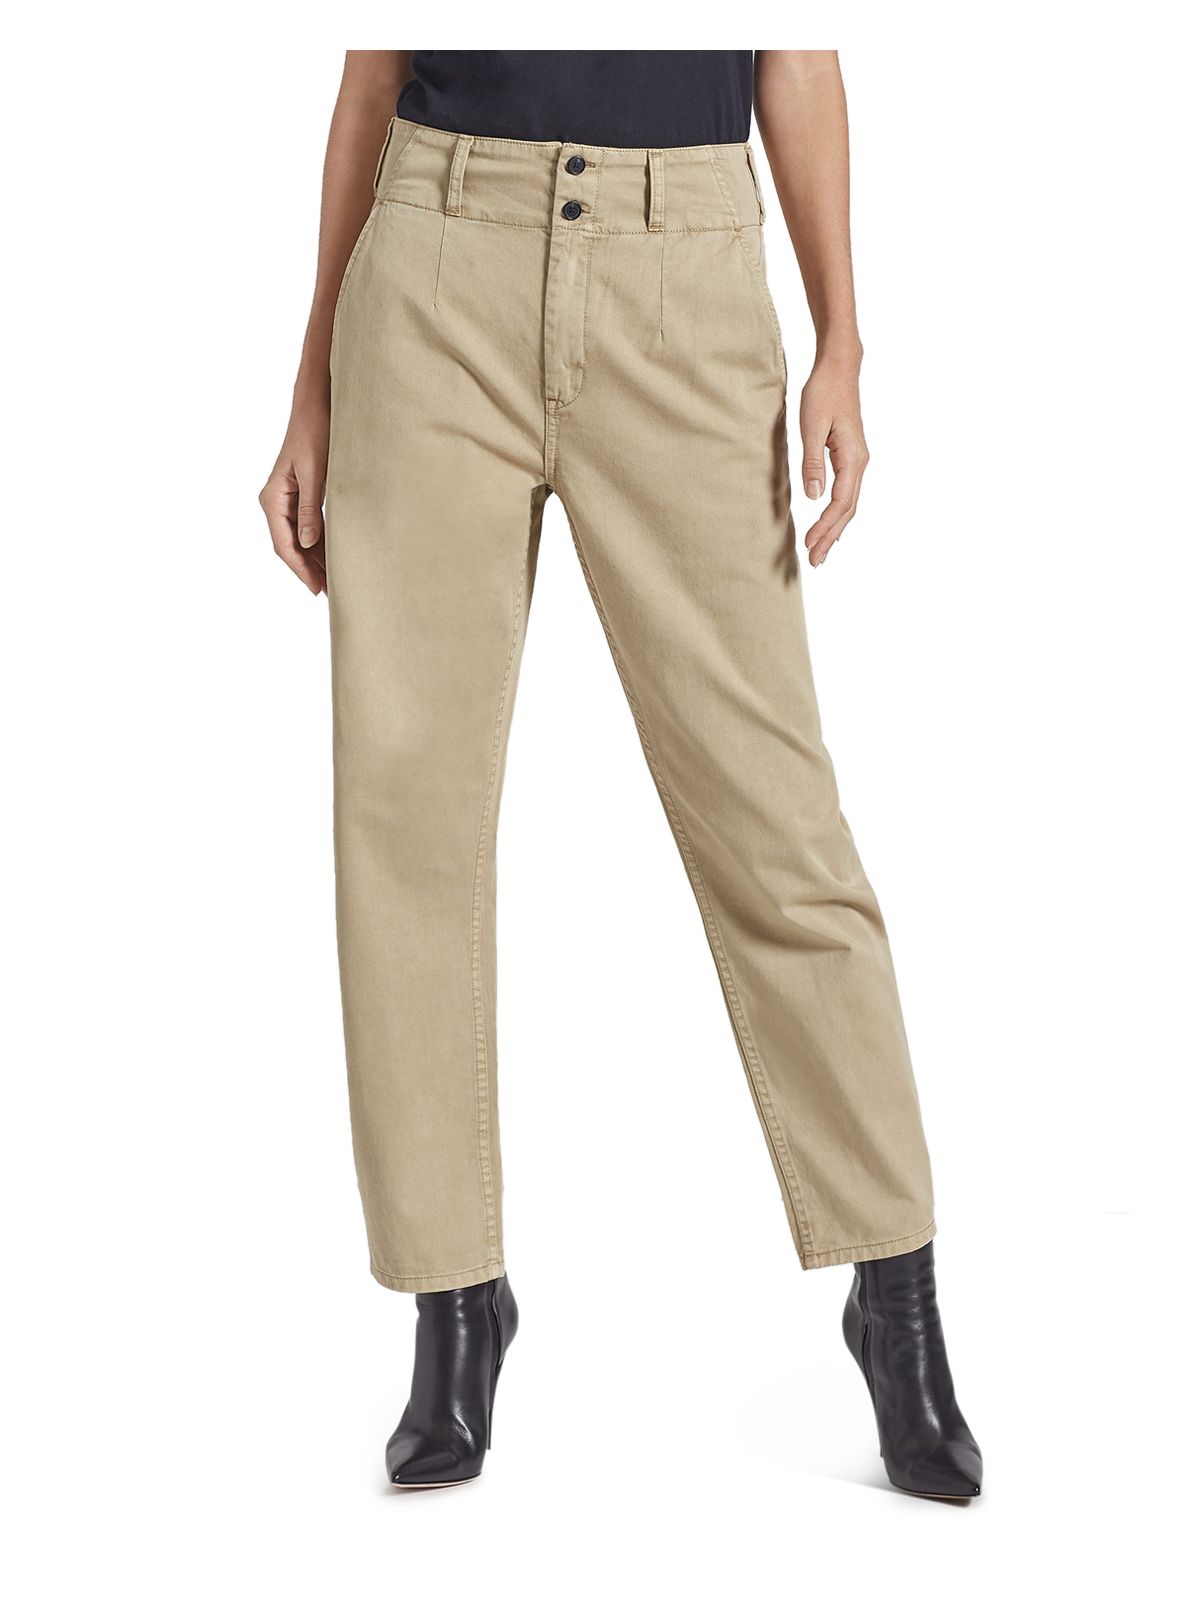 CURRENT/ELLIOTT Womens Beige High Waist Pants Size: 27